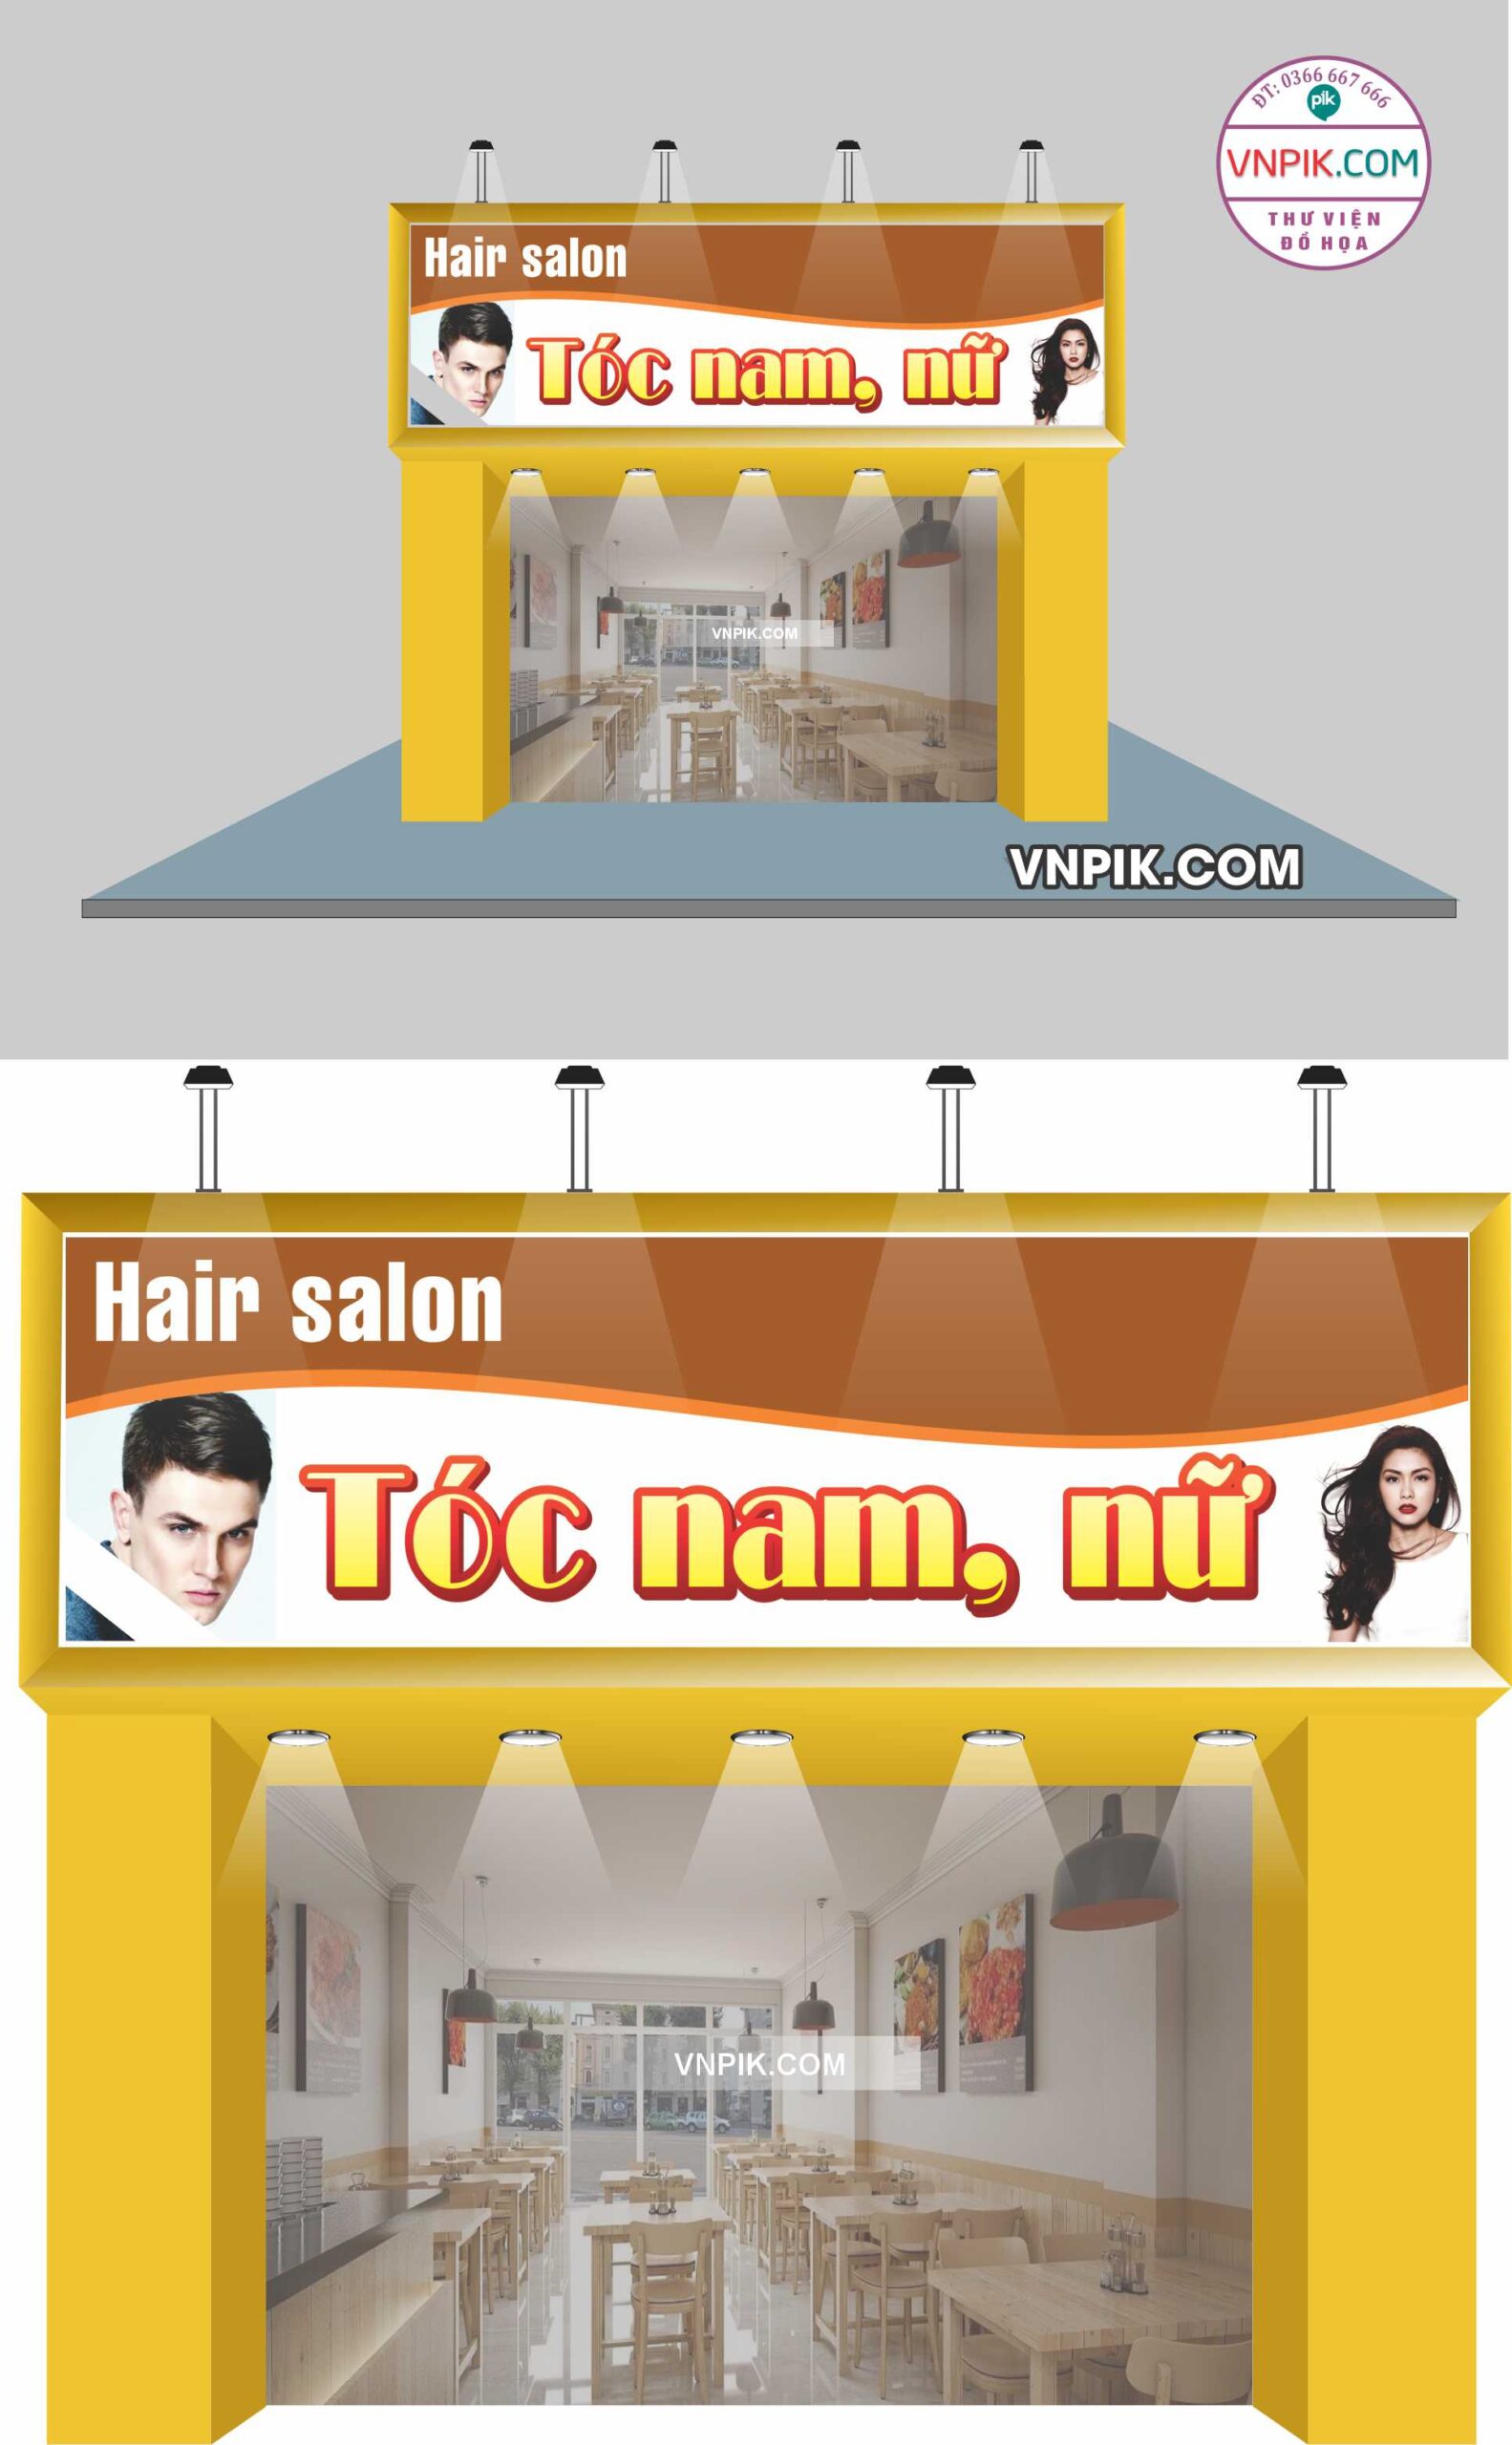 Mẫu biển hair salon tóc nam nữ